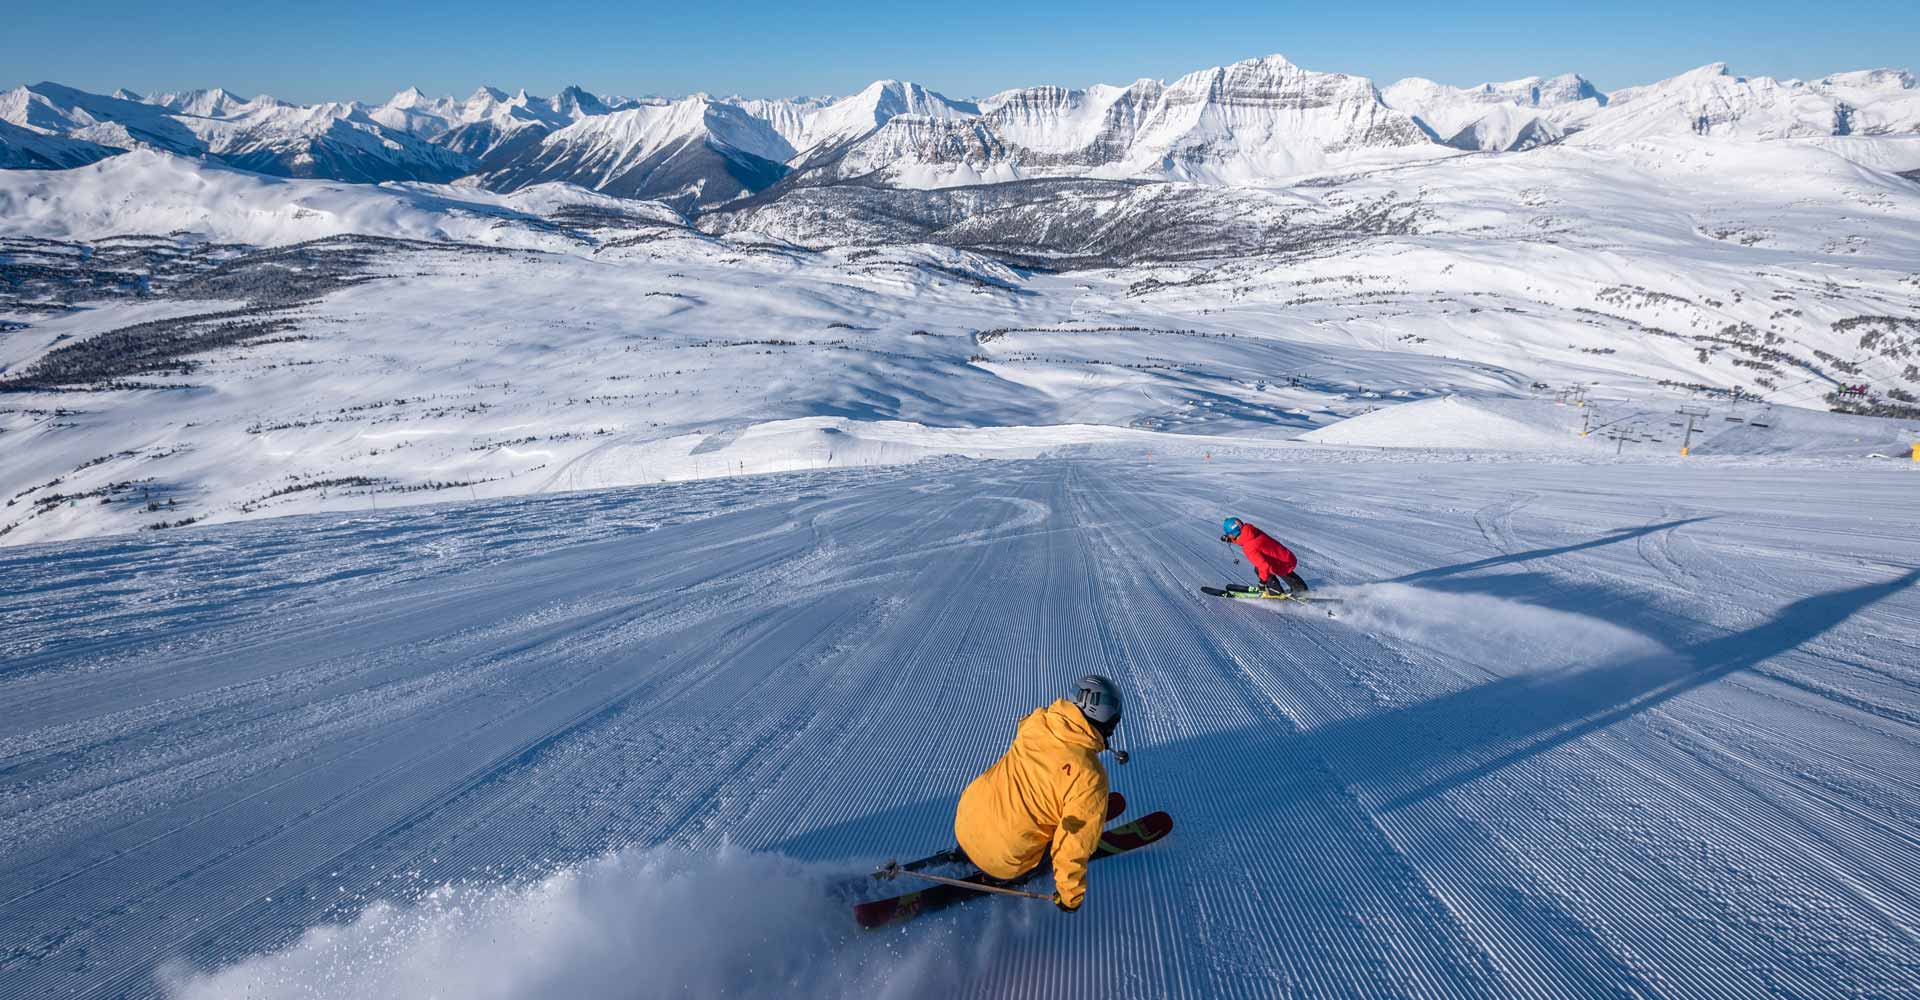 Sunshine Village Ski and Snowboard Resort in Canada, North America | Snowboarding,Skiing - Rated 4.9